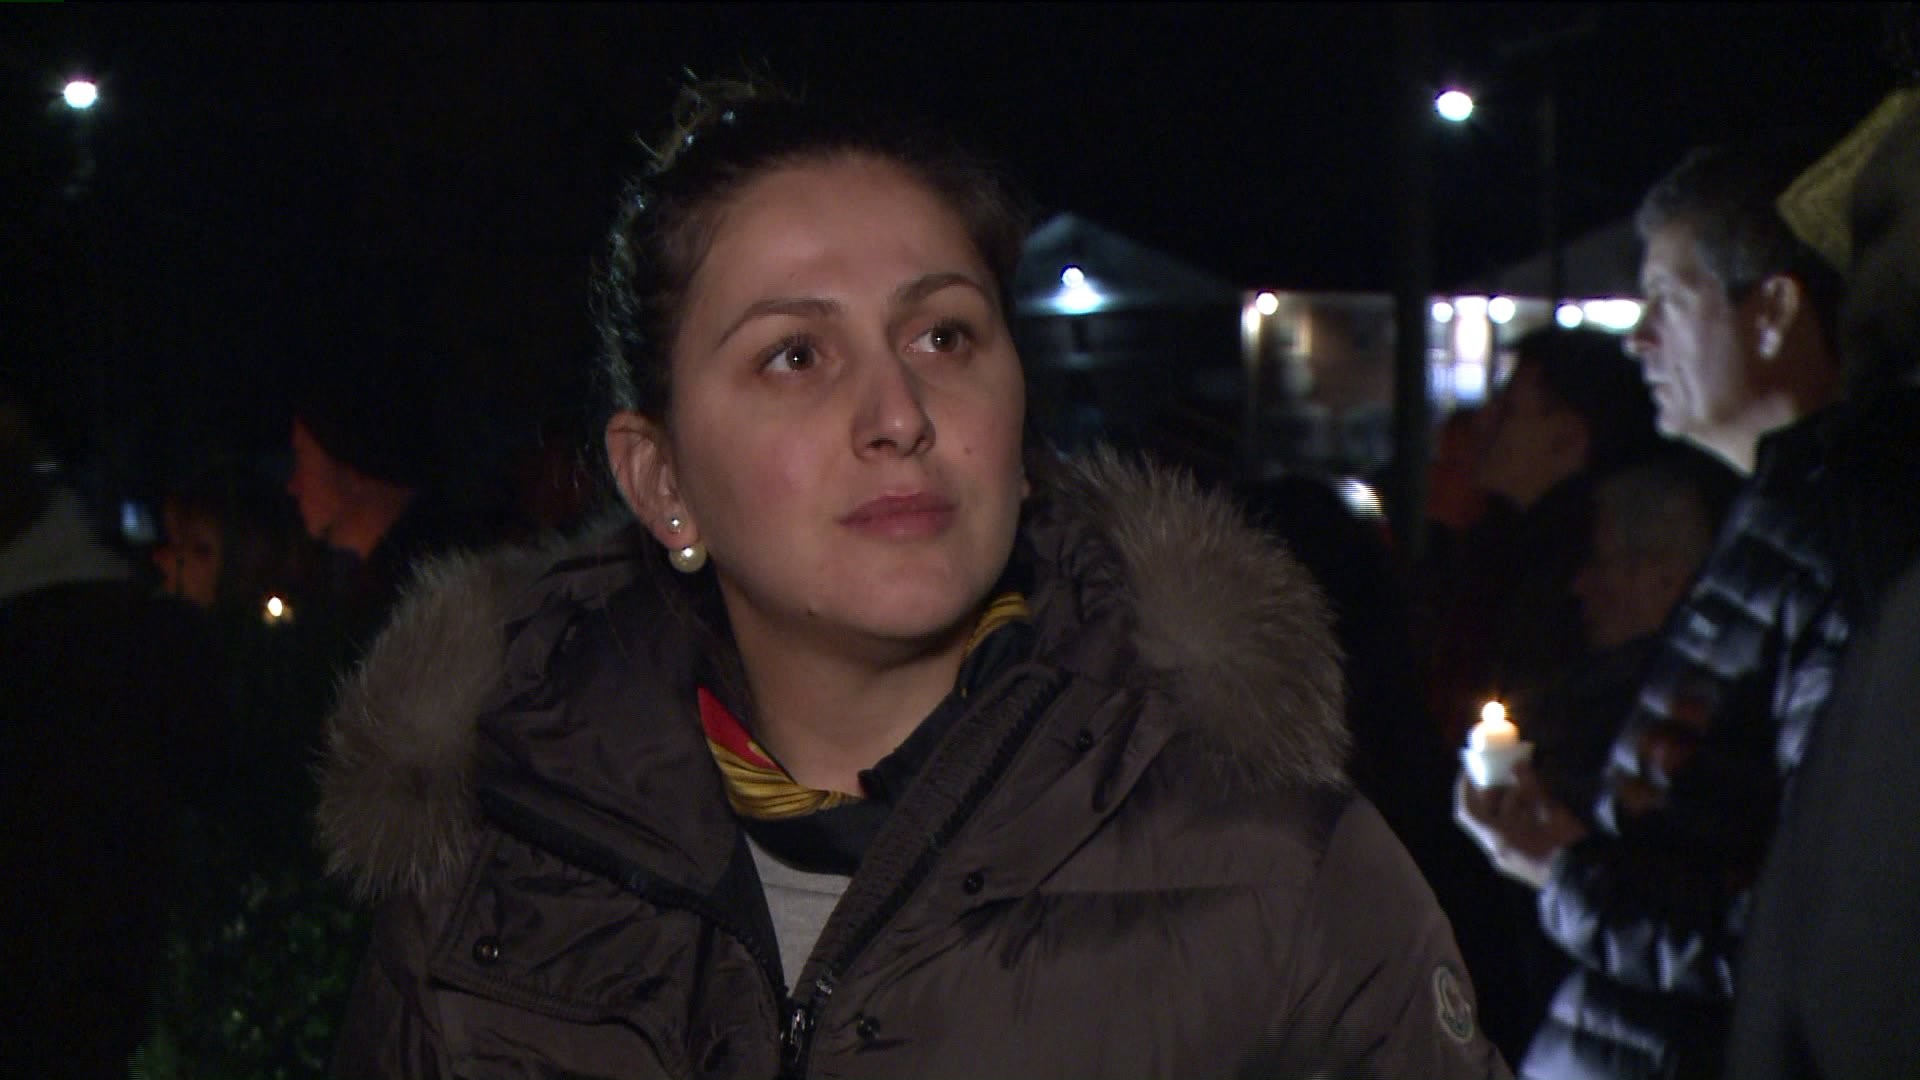 Cheshire woman awaits deportation